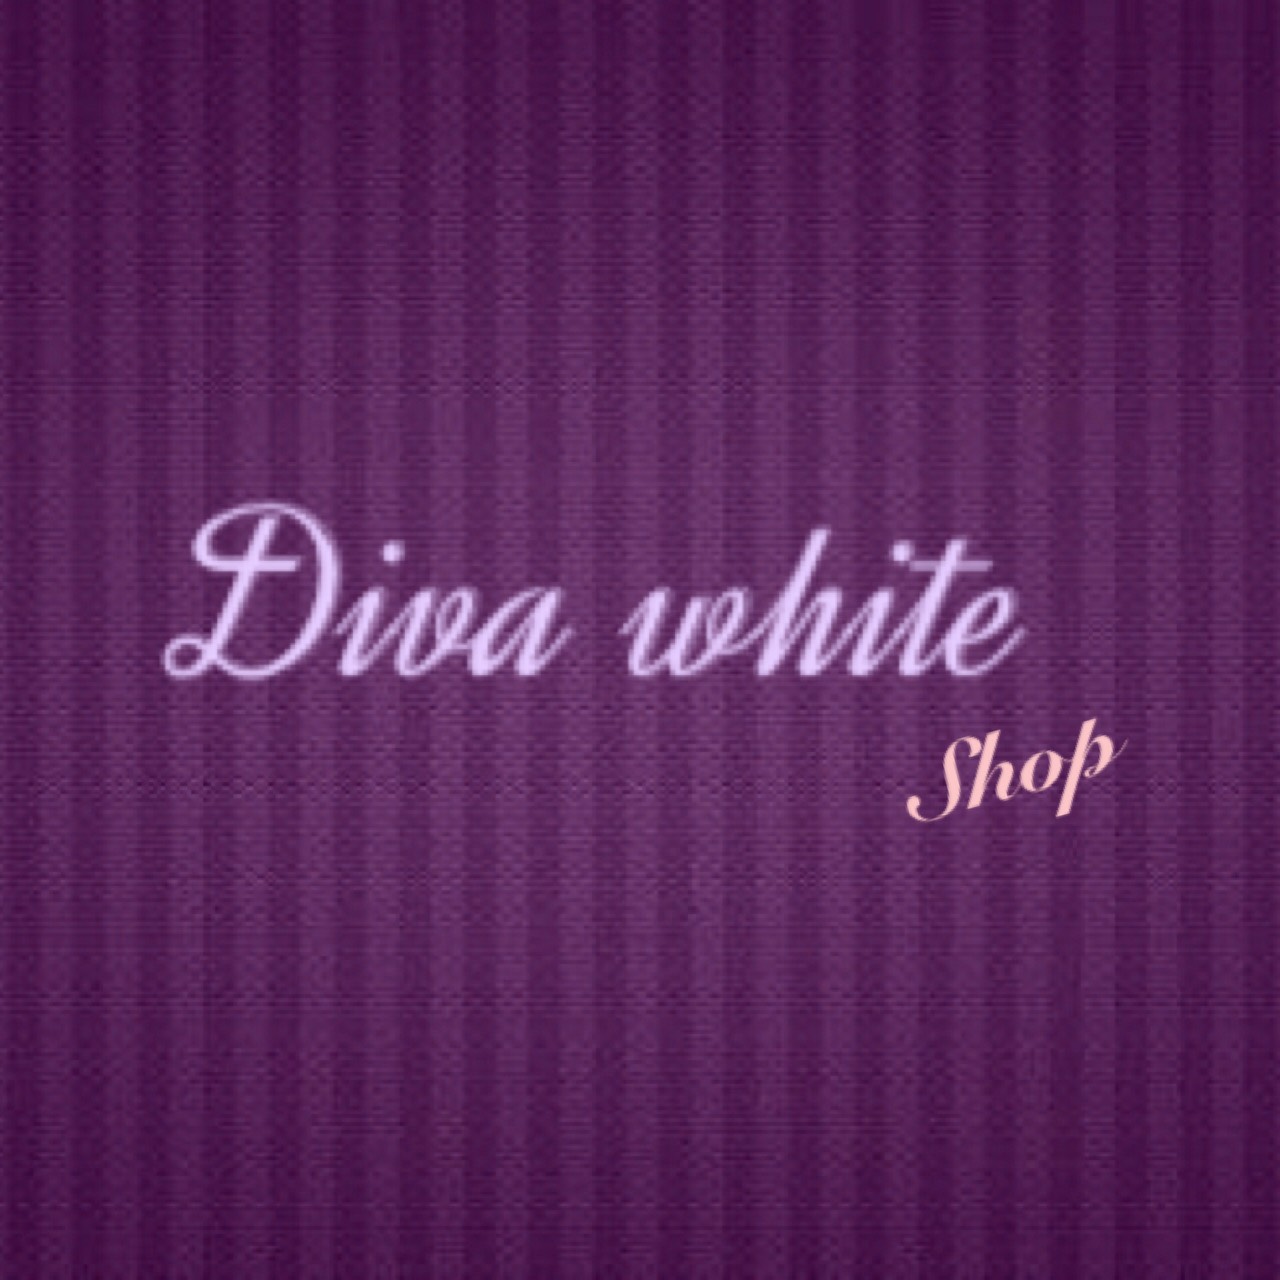 Dirawhite shop